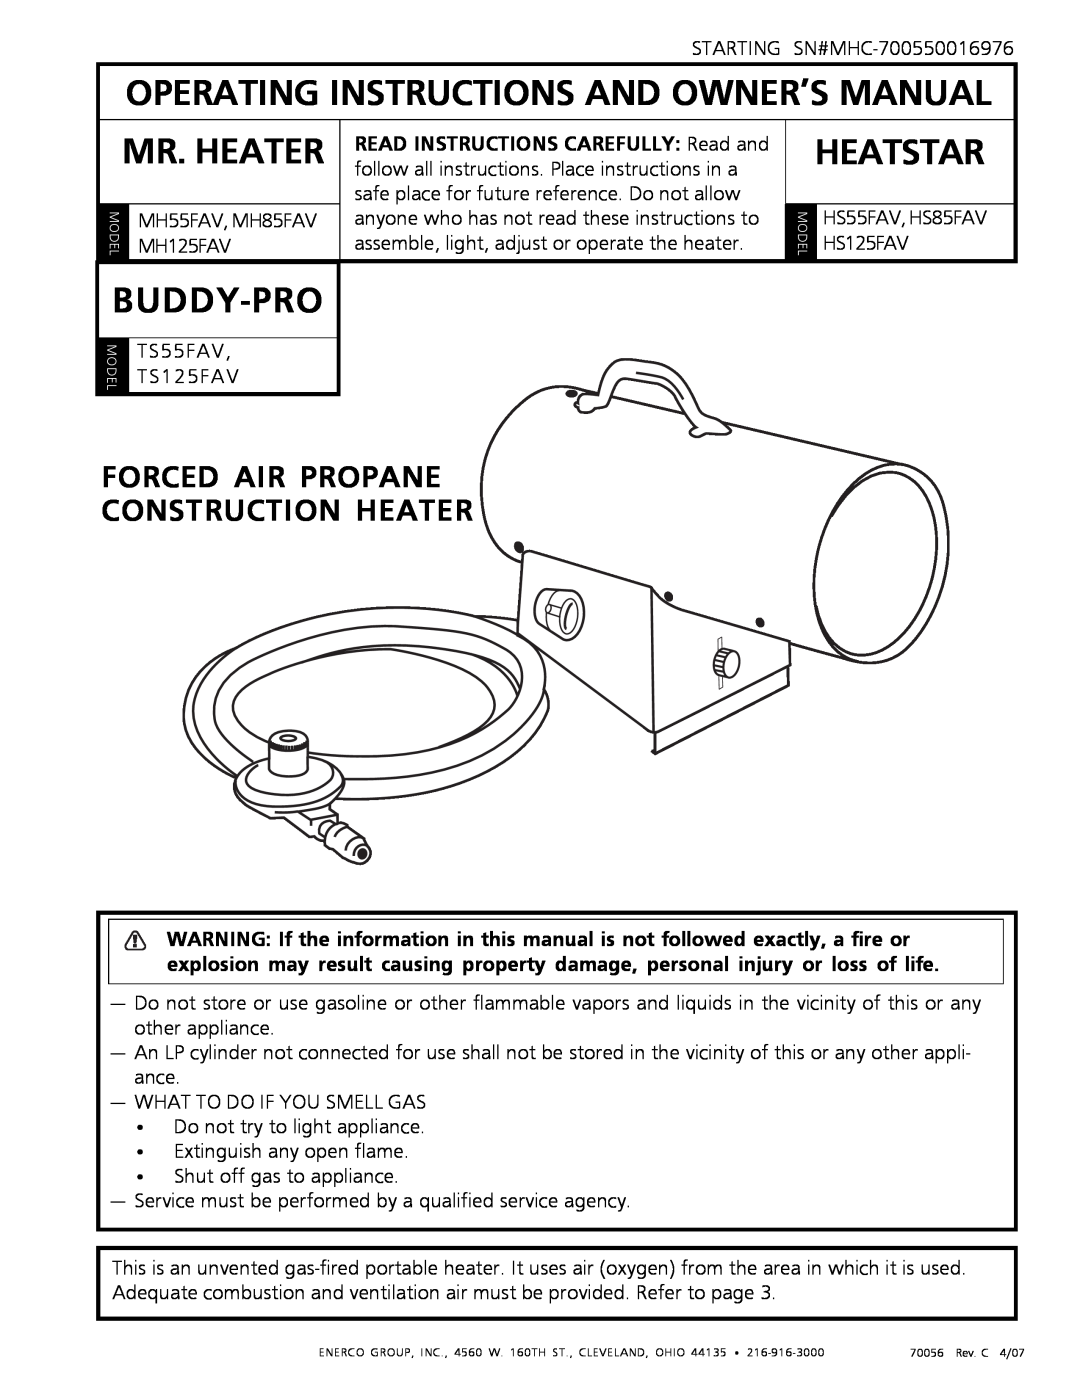 Mr. Heater MH55FAV, TS55FAV owner manual Mr. Heater, Heatstar, Buddy-Pro, Forced Air Propane Construction Heater, MH125FAV 